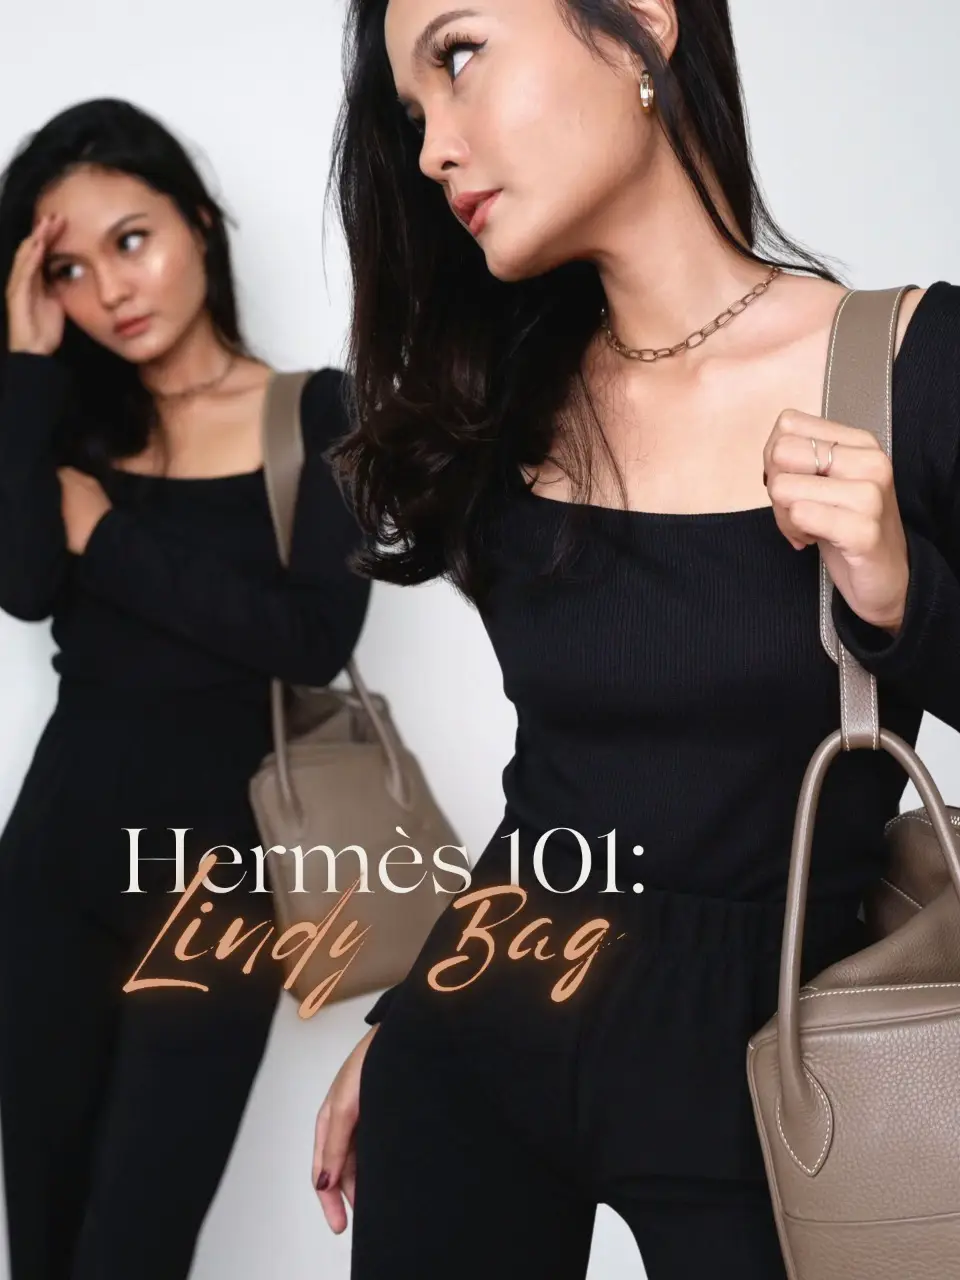 Hermès 101: Lindy Bag, Gallery posted by Natasshanjani